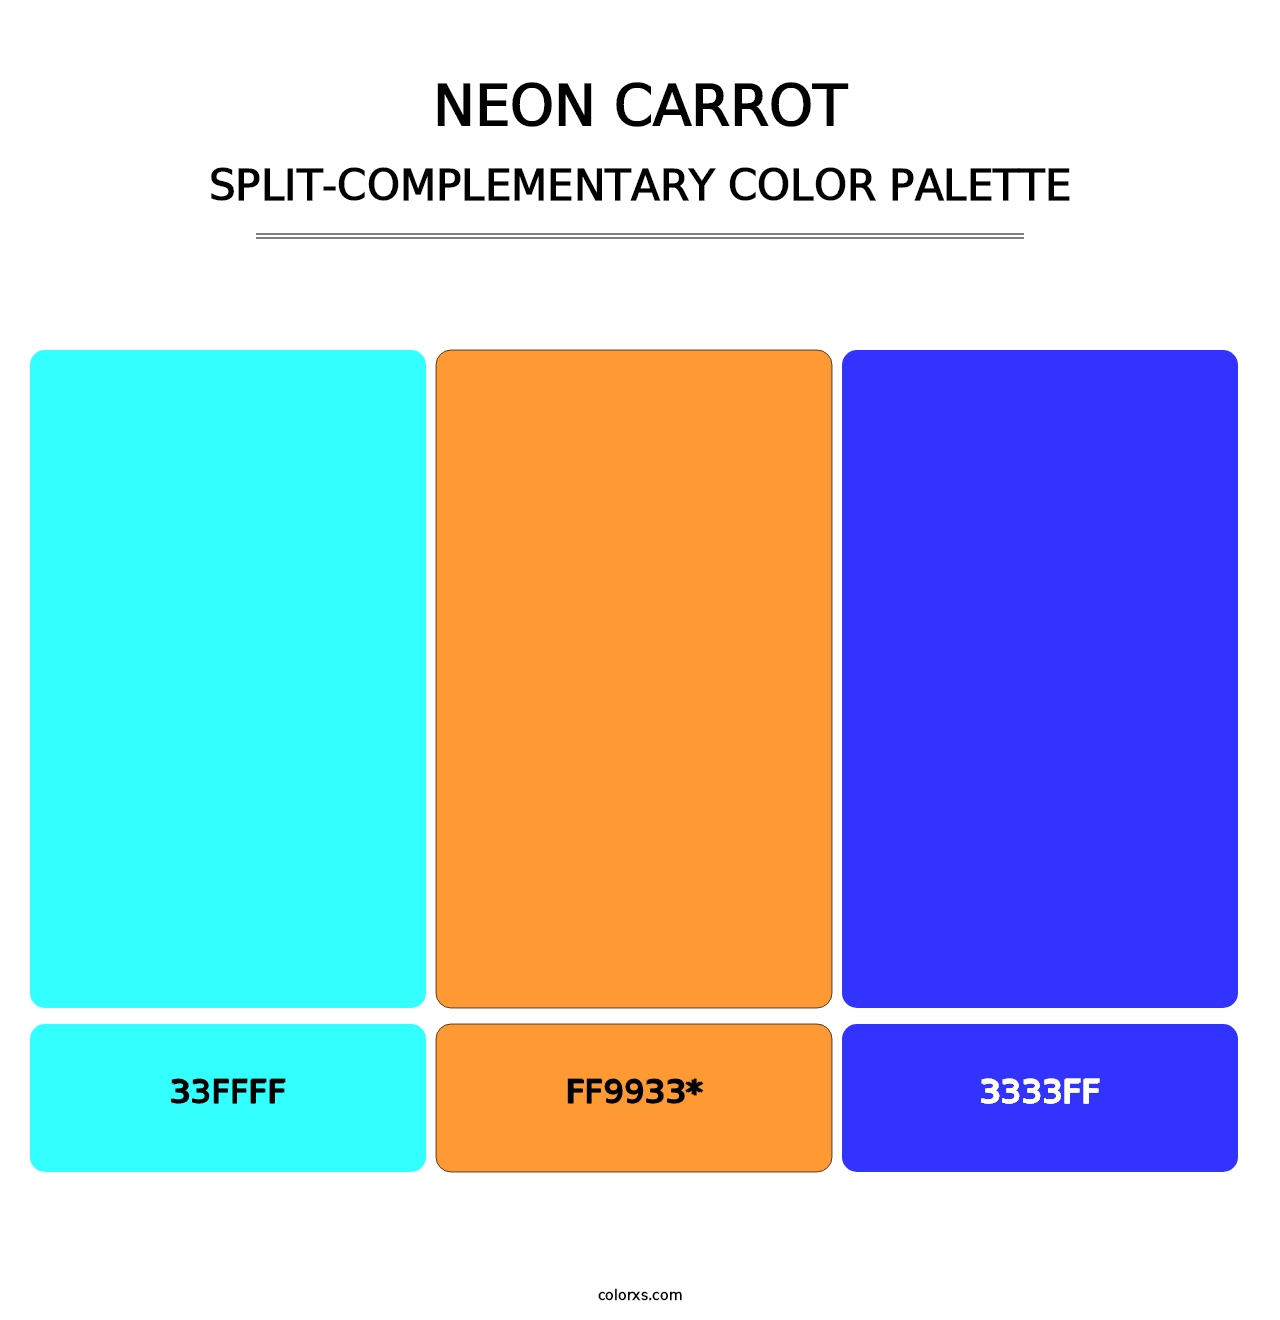 Neon Carrot - Split-Complementary Color Palette